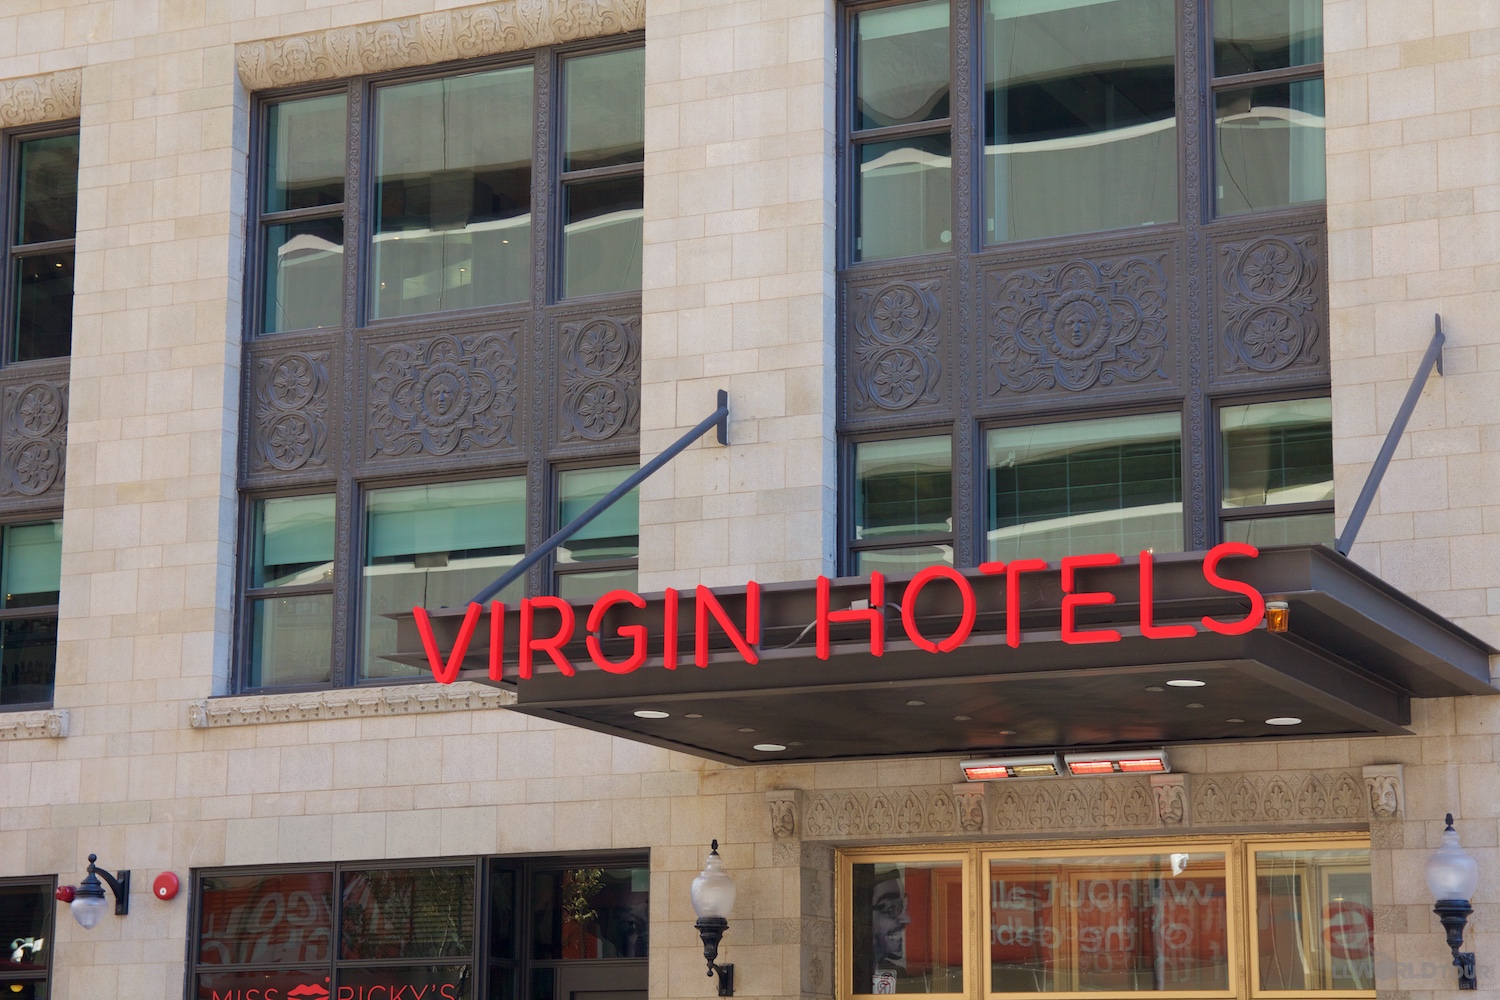 Virgin Hotel Chicago